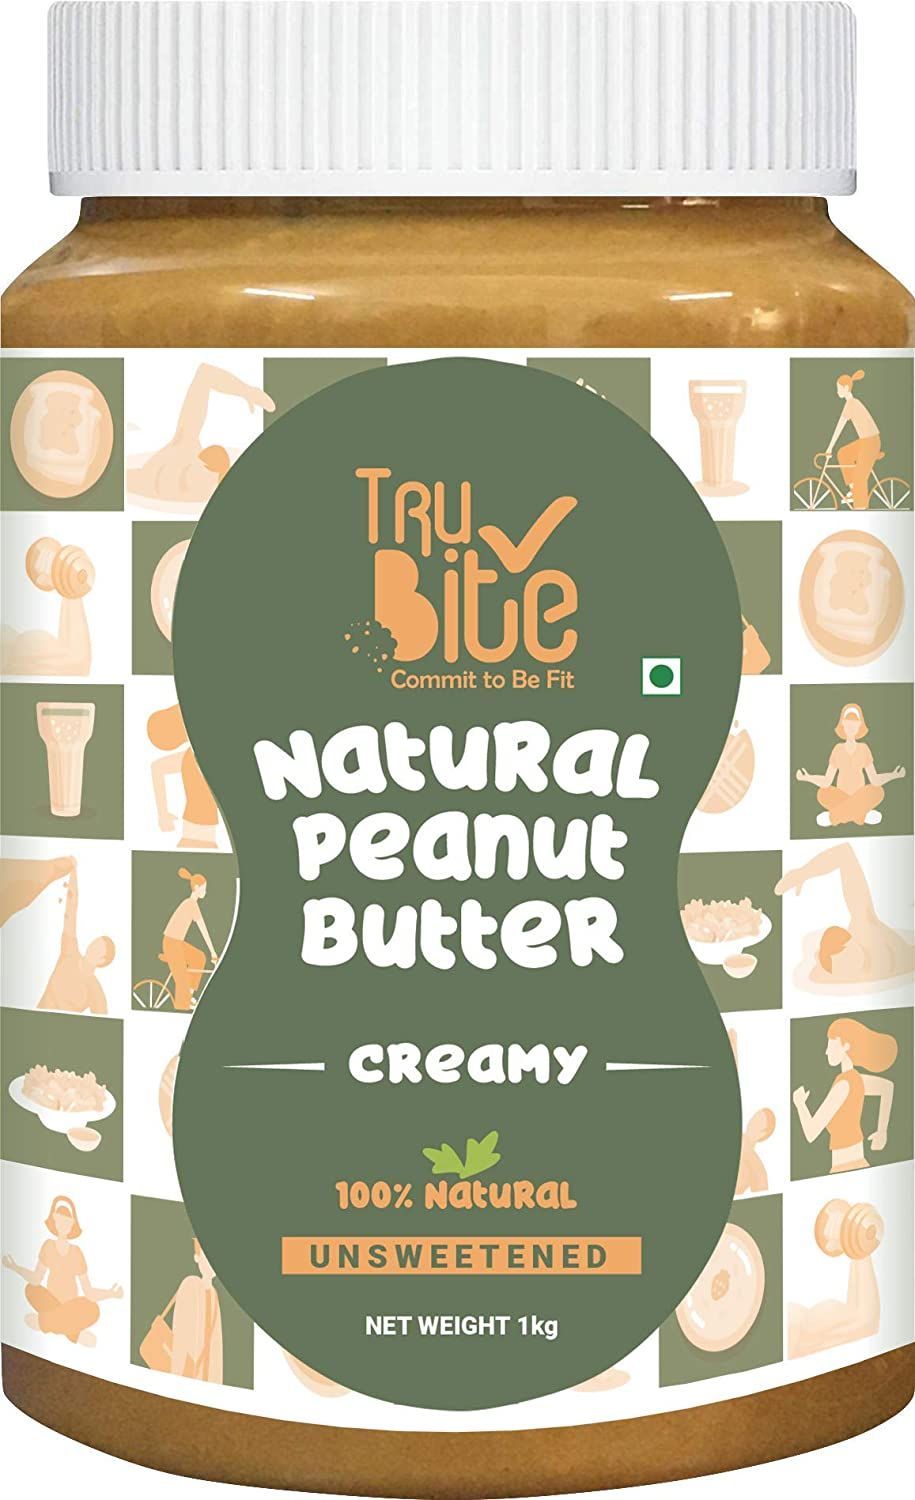 Trubite Natural Peanut Butter Creamy Image